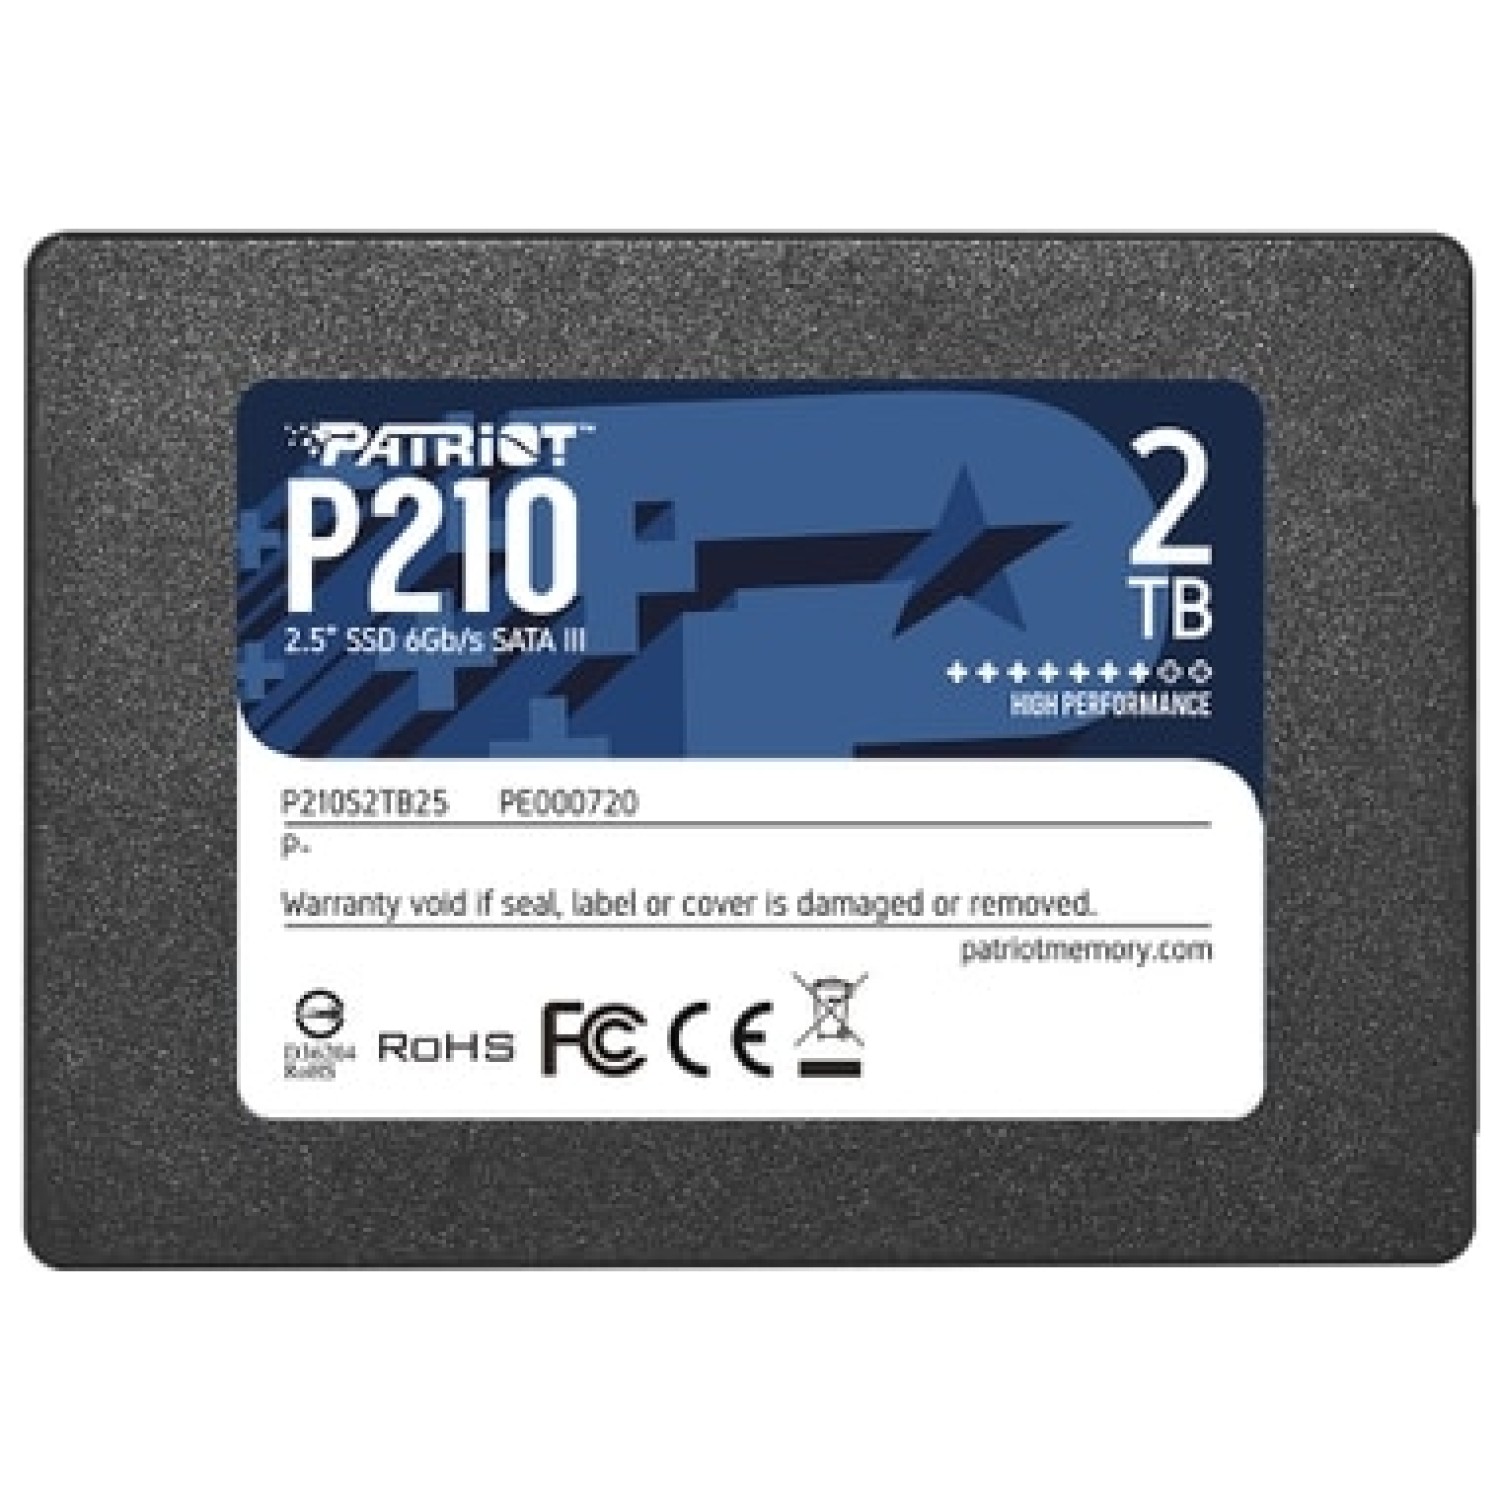 Patriot P210 2TB SSD SATA 3 2.5"